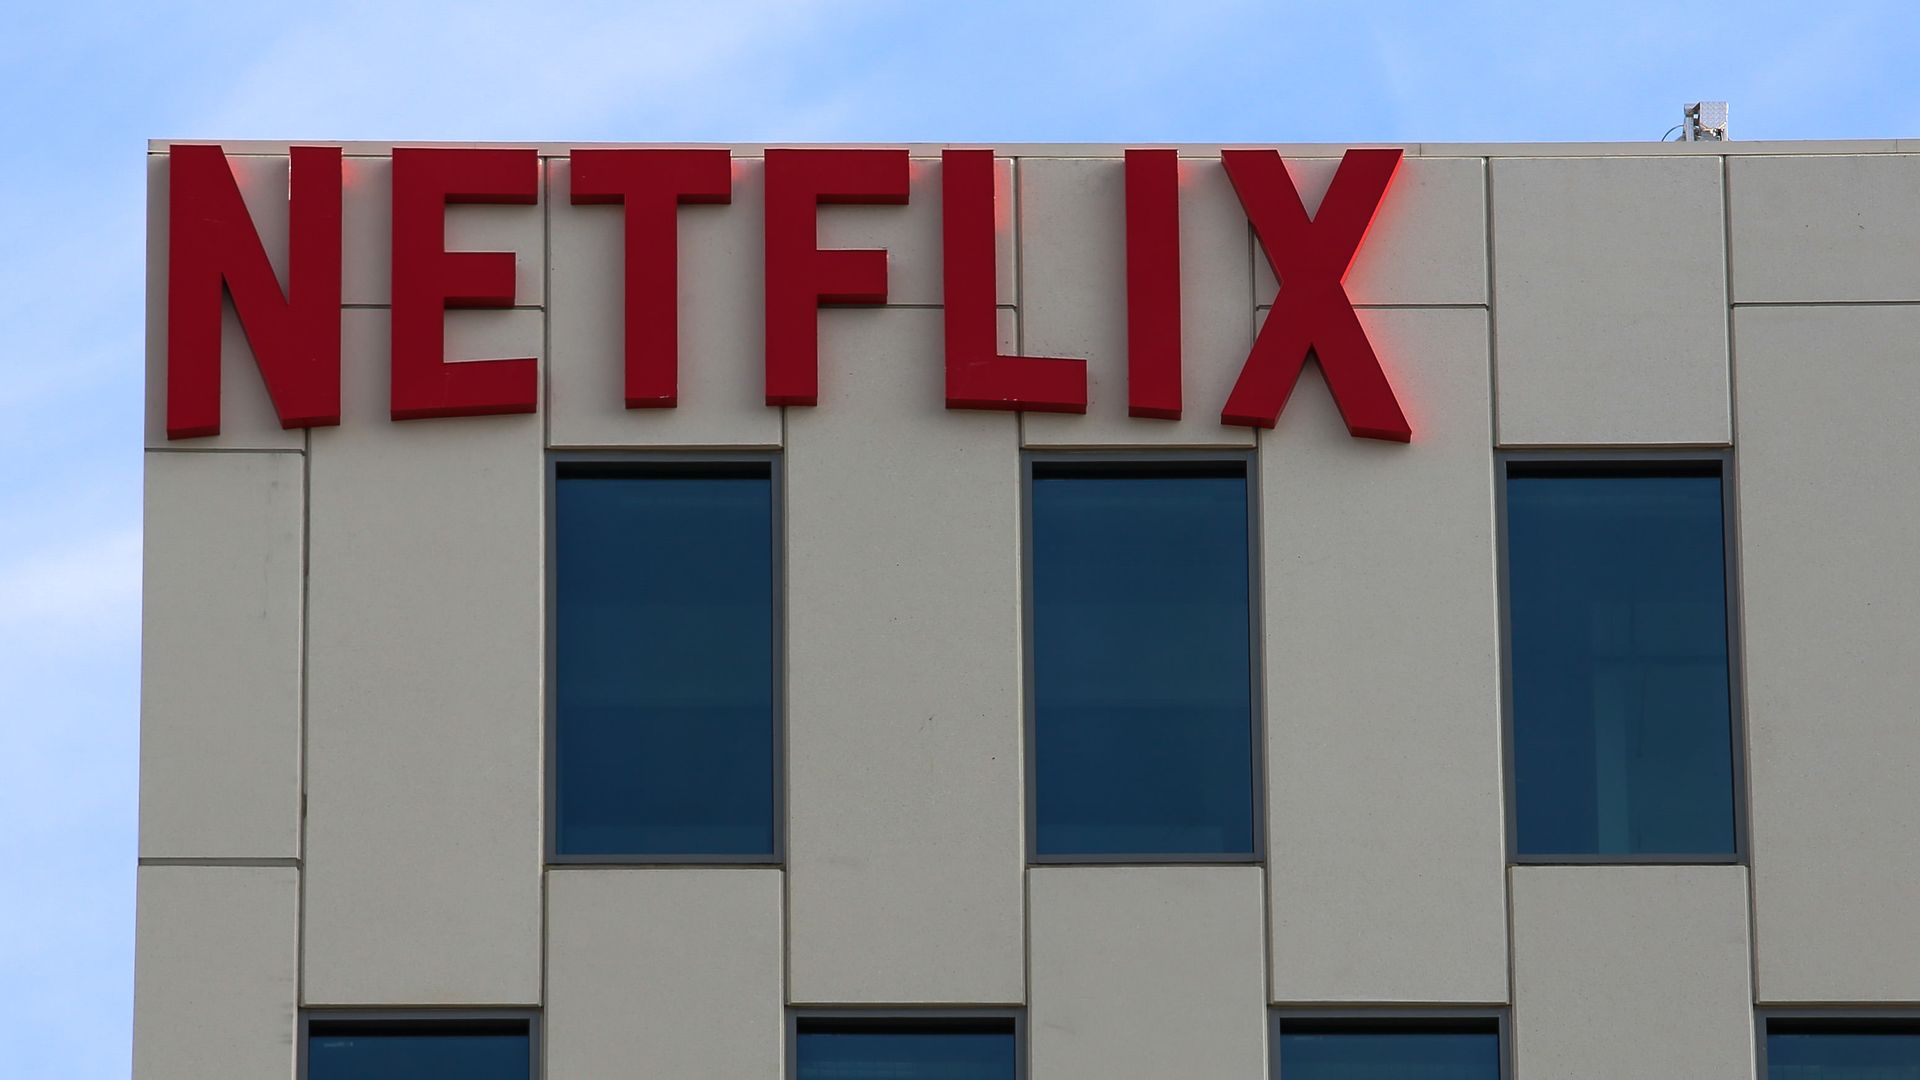 Netflix logo on a building side